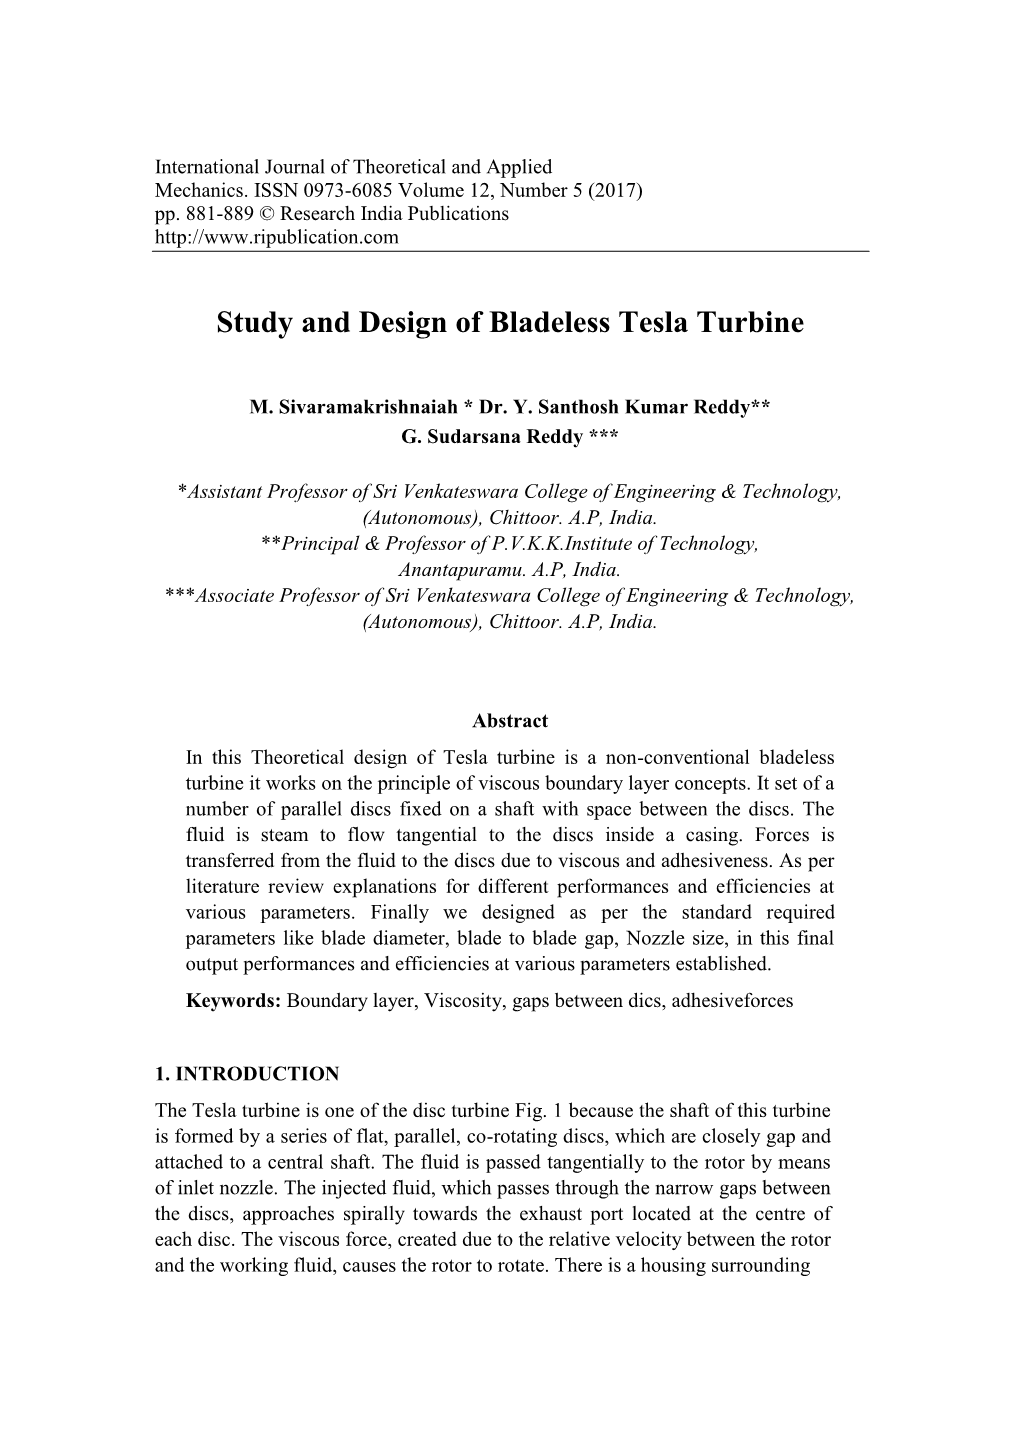 Study and Design of Bladeless Tesla Turbine